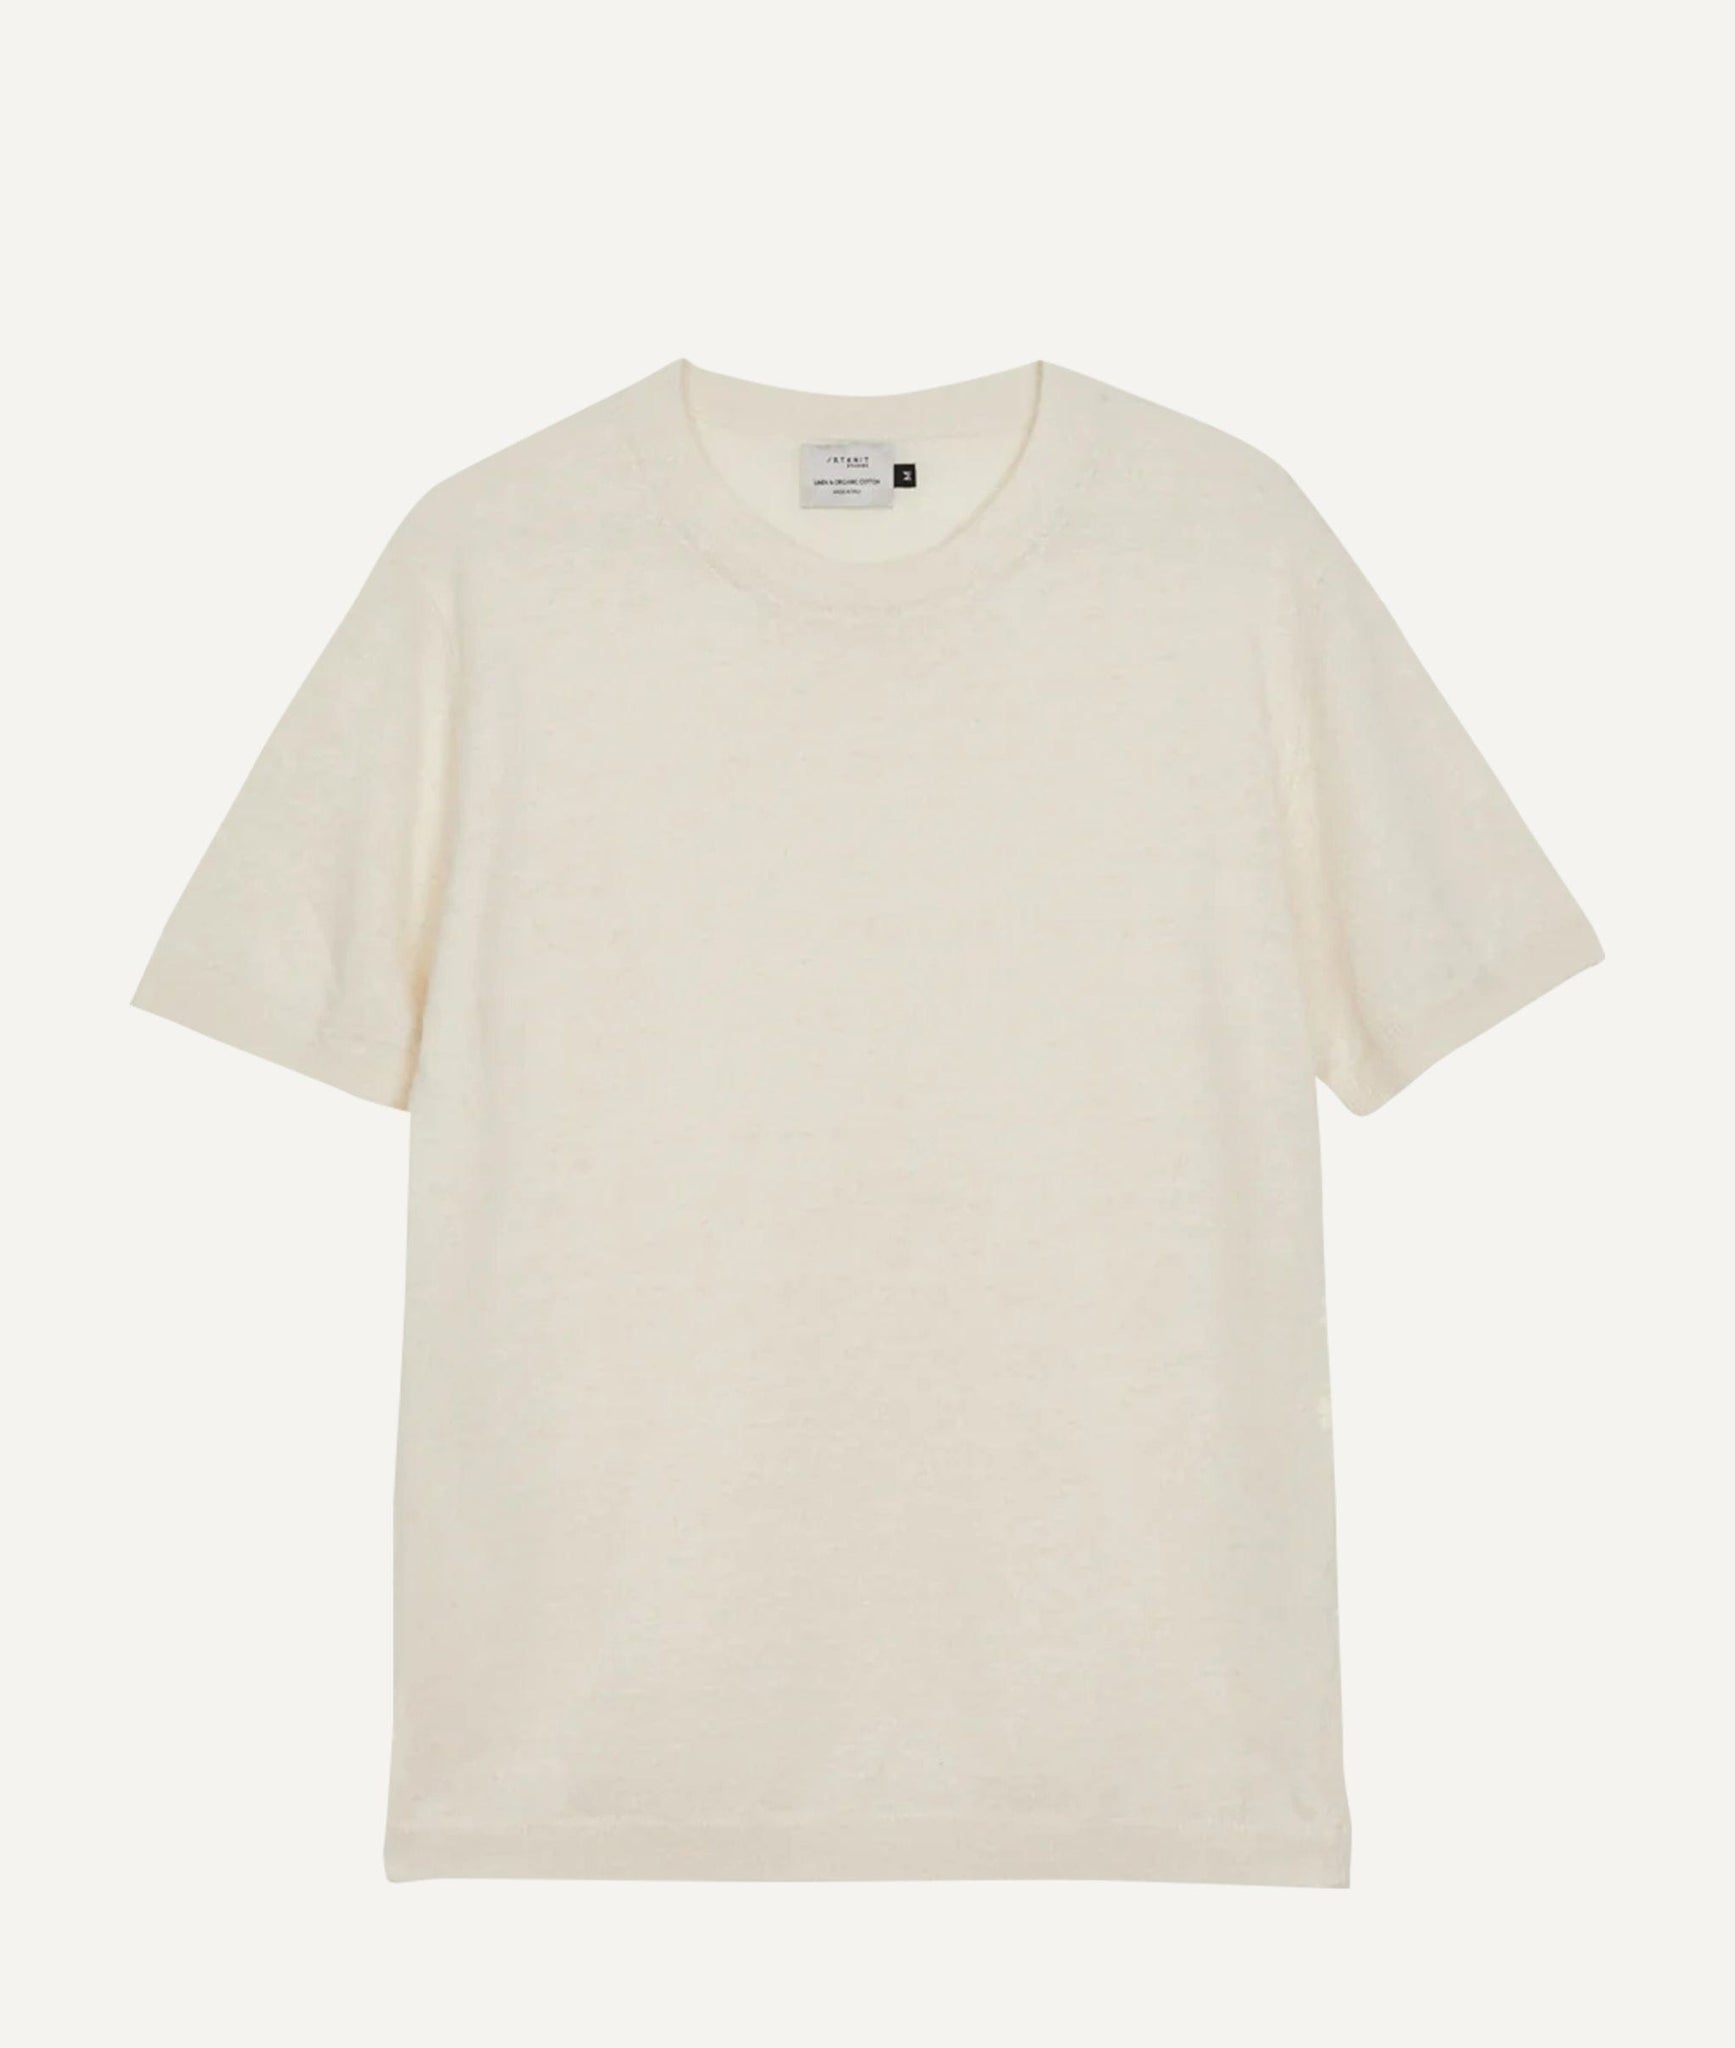 Das Leinen-Baumwoll-Strick-T-Shirt